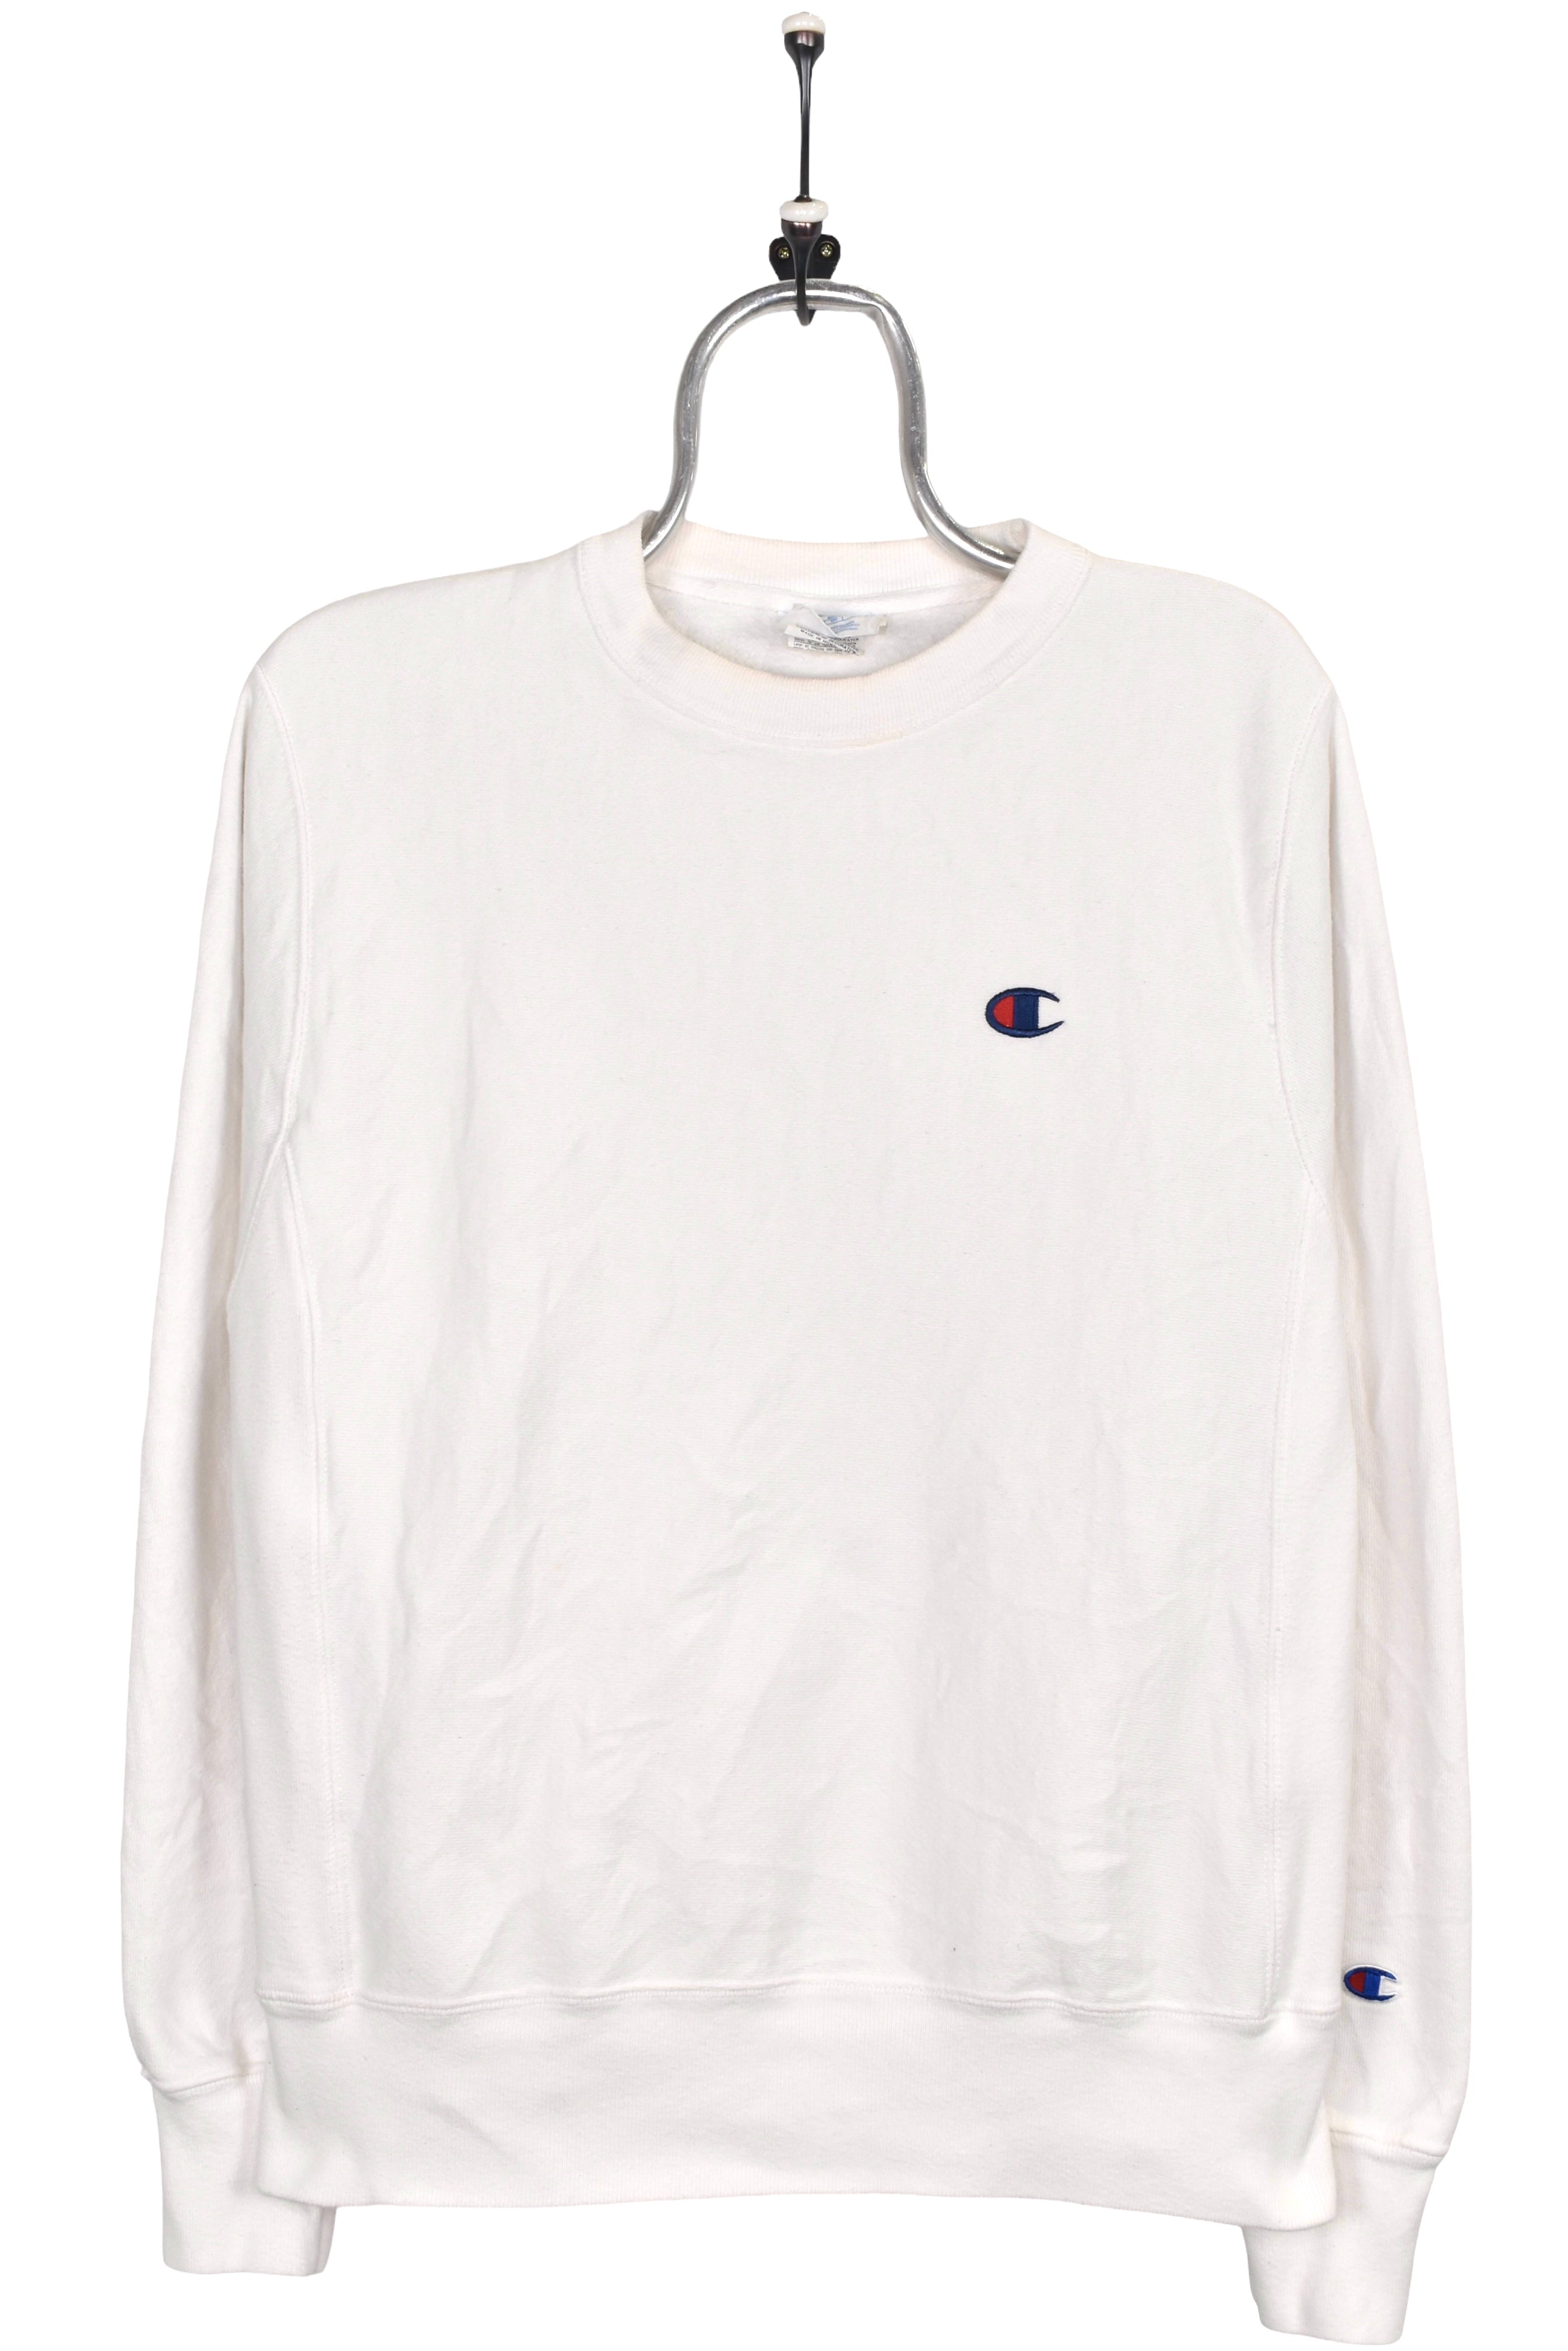 Modern Champion sweatshirt, white embroidered crewneck - Small